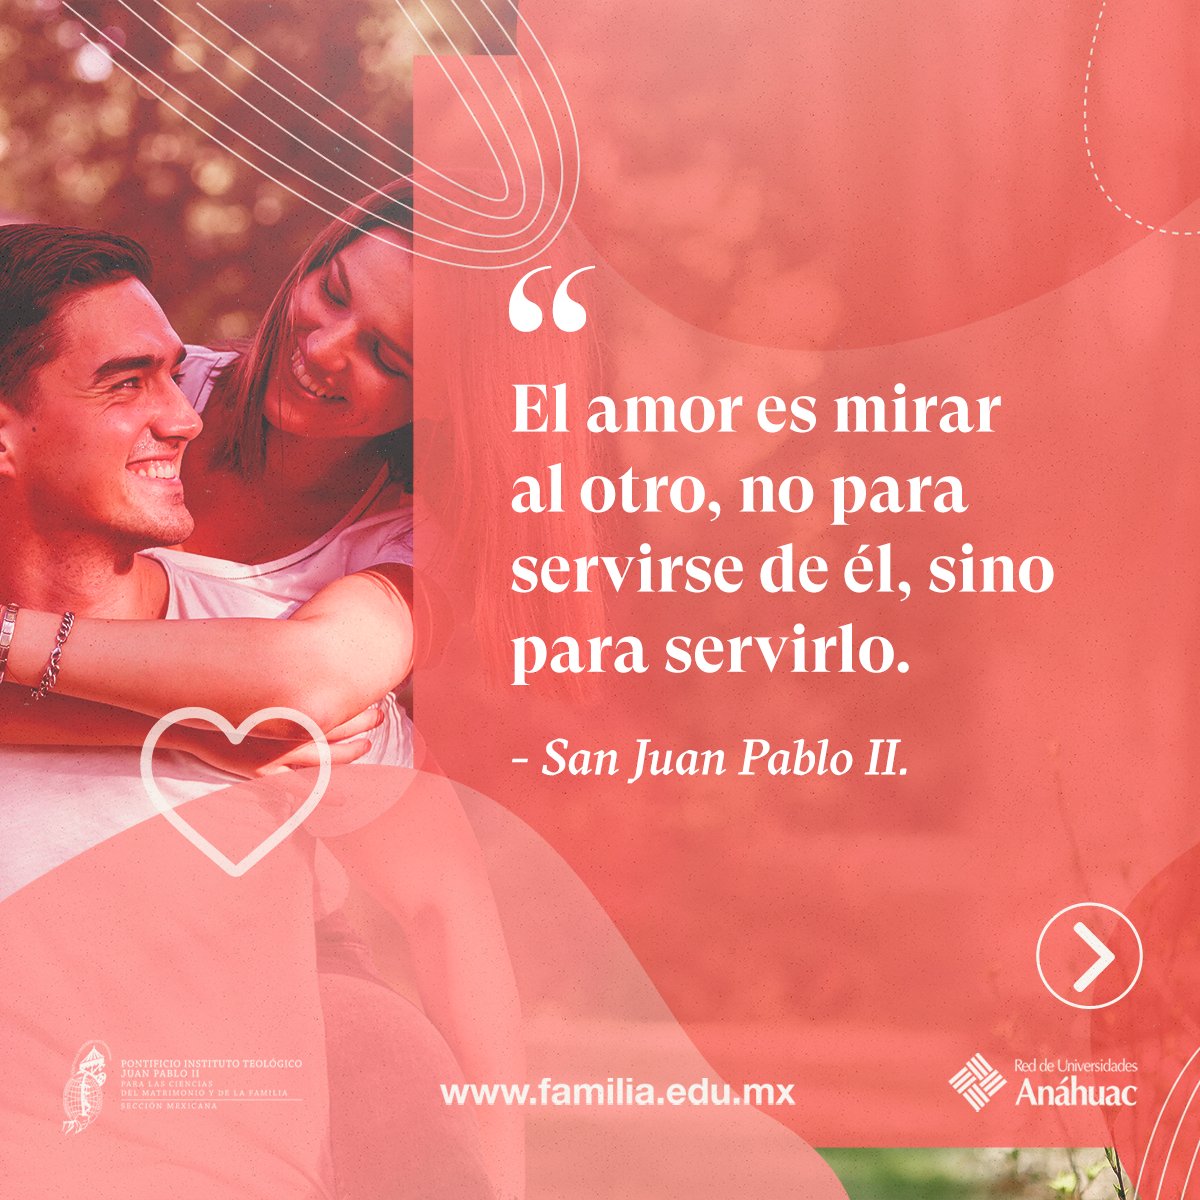 Inst. Juan Pablo II on Twitter: 